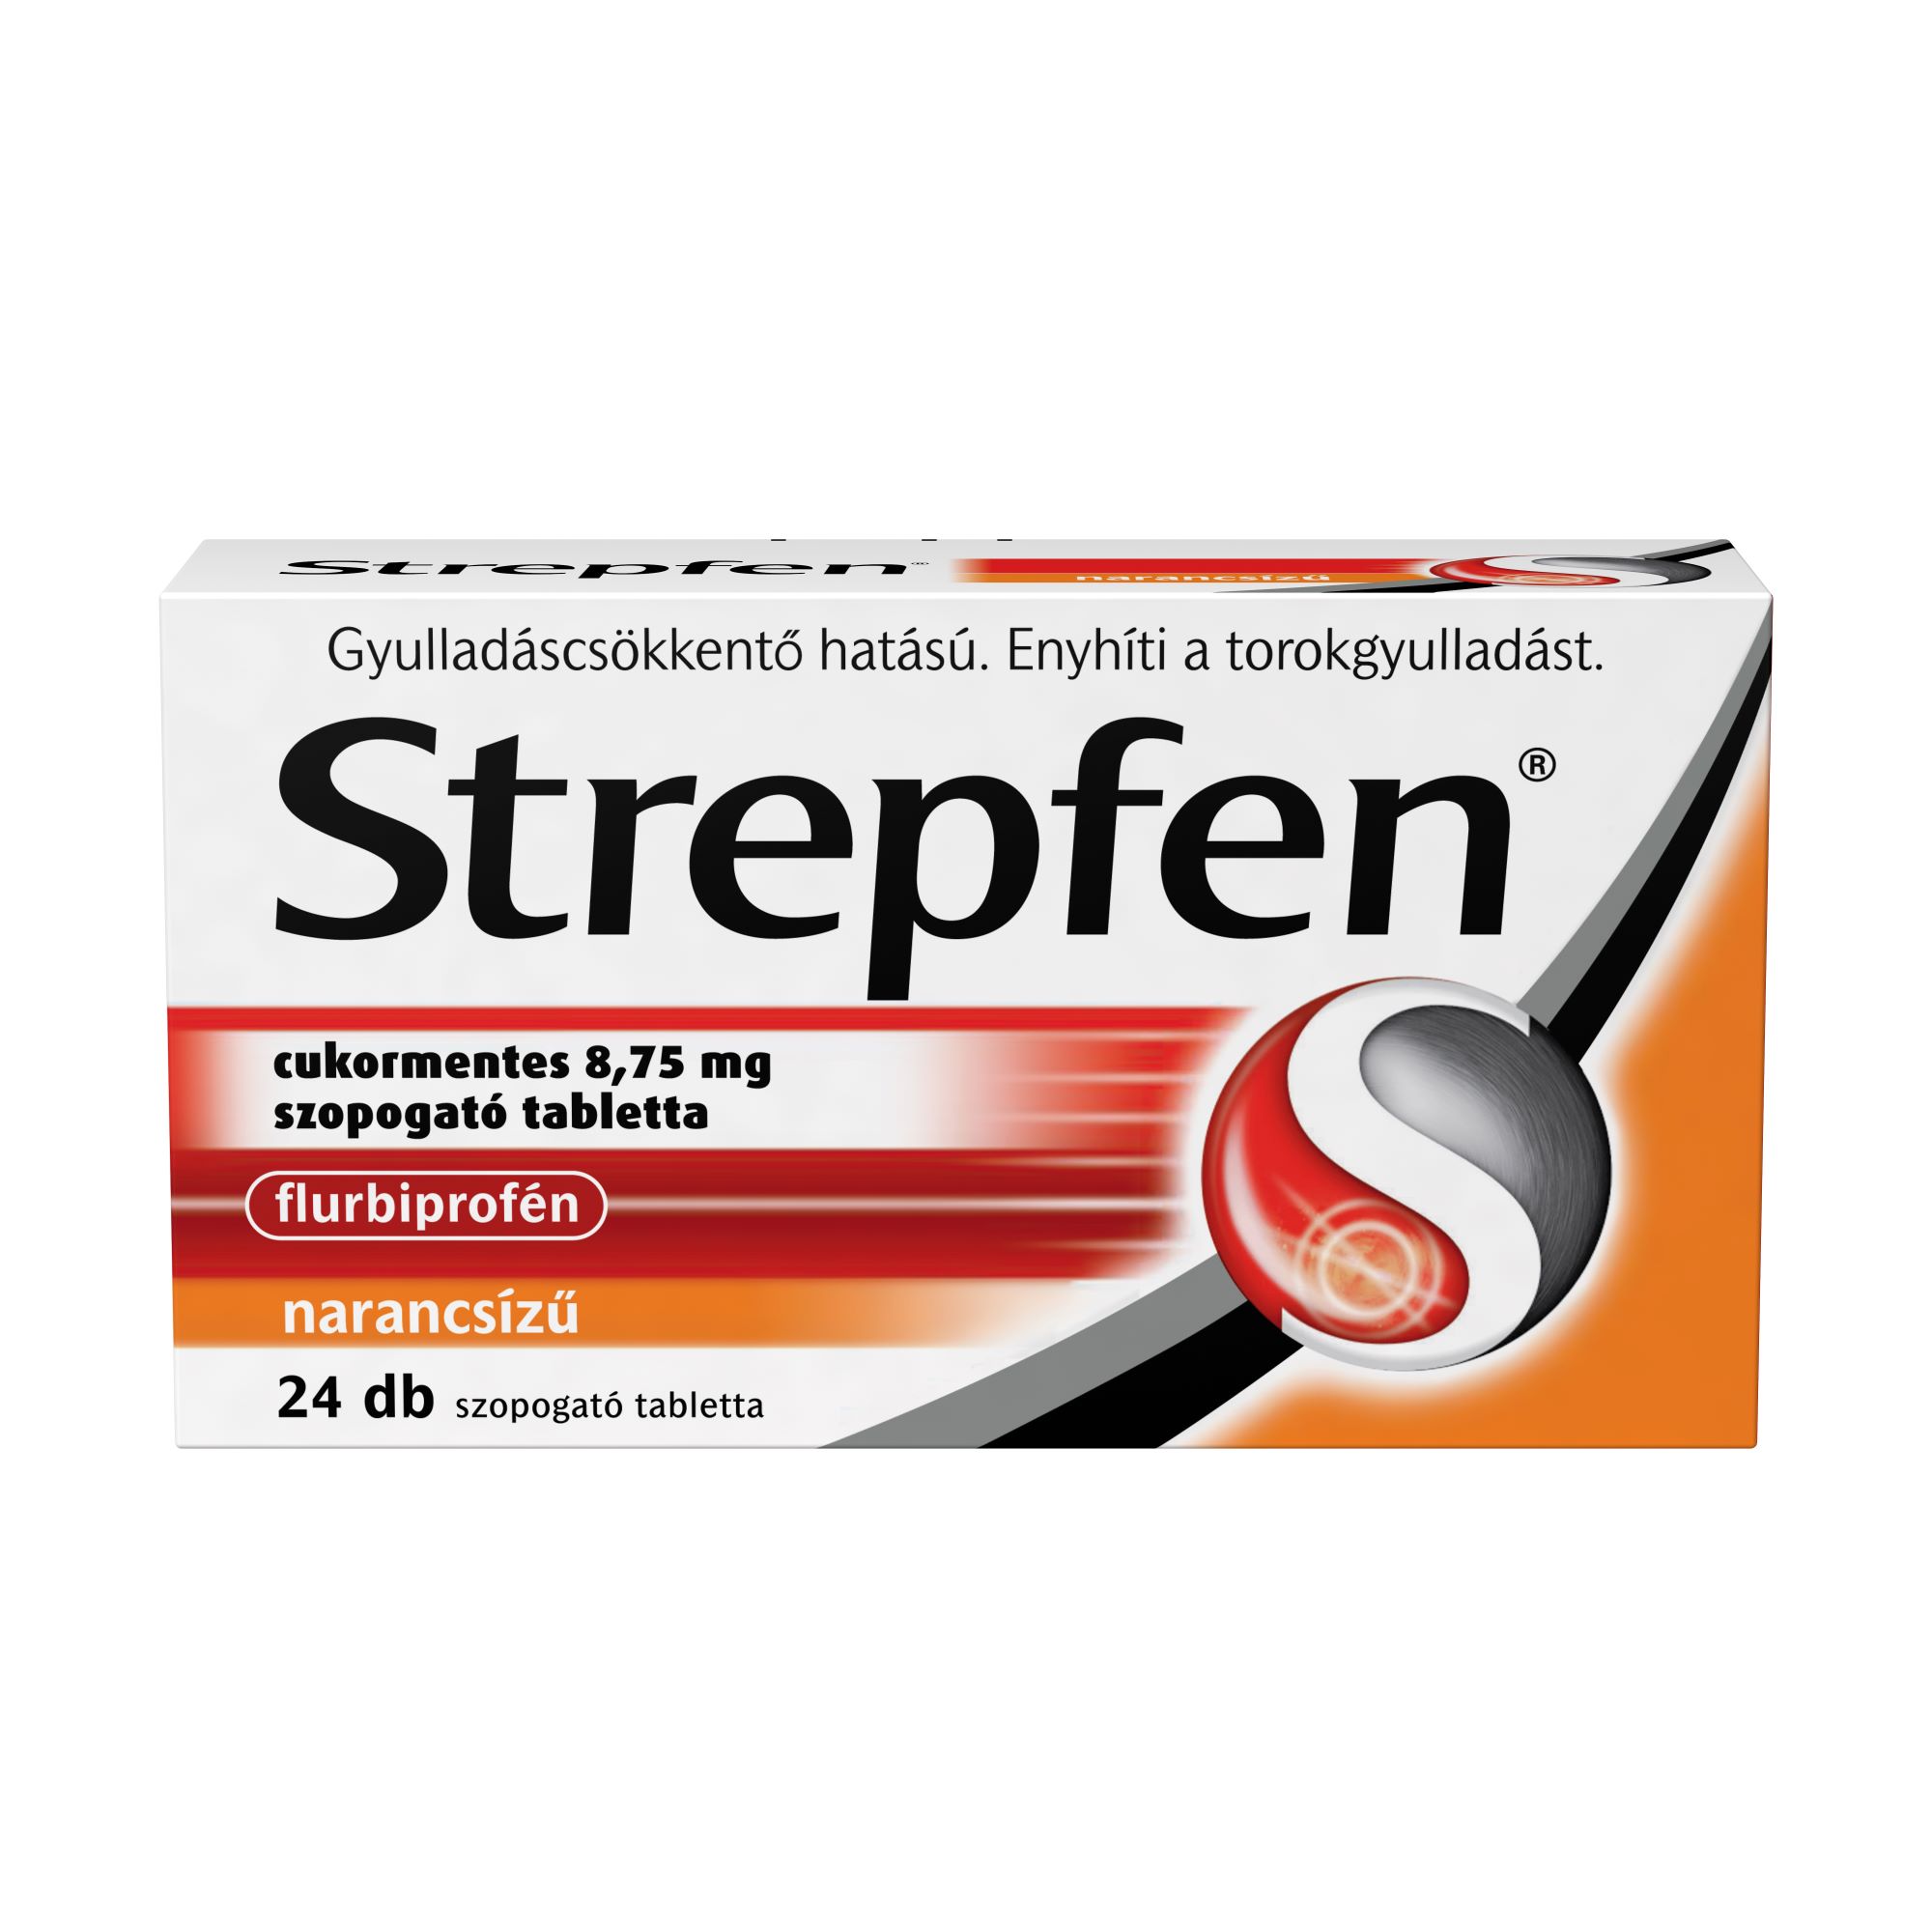 Strepfen cukormentes 8,75 mg szopogató tabletta